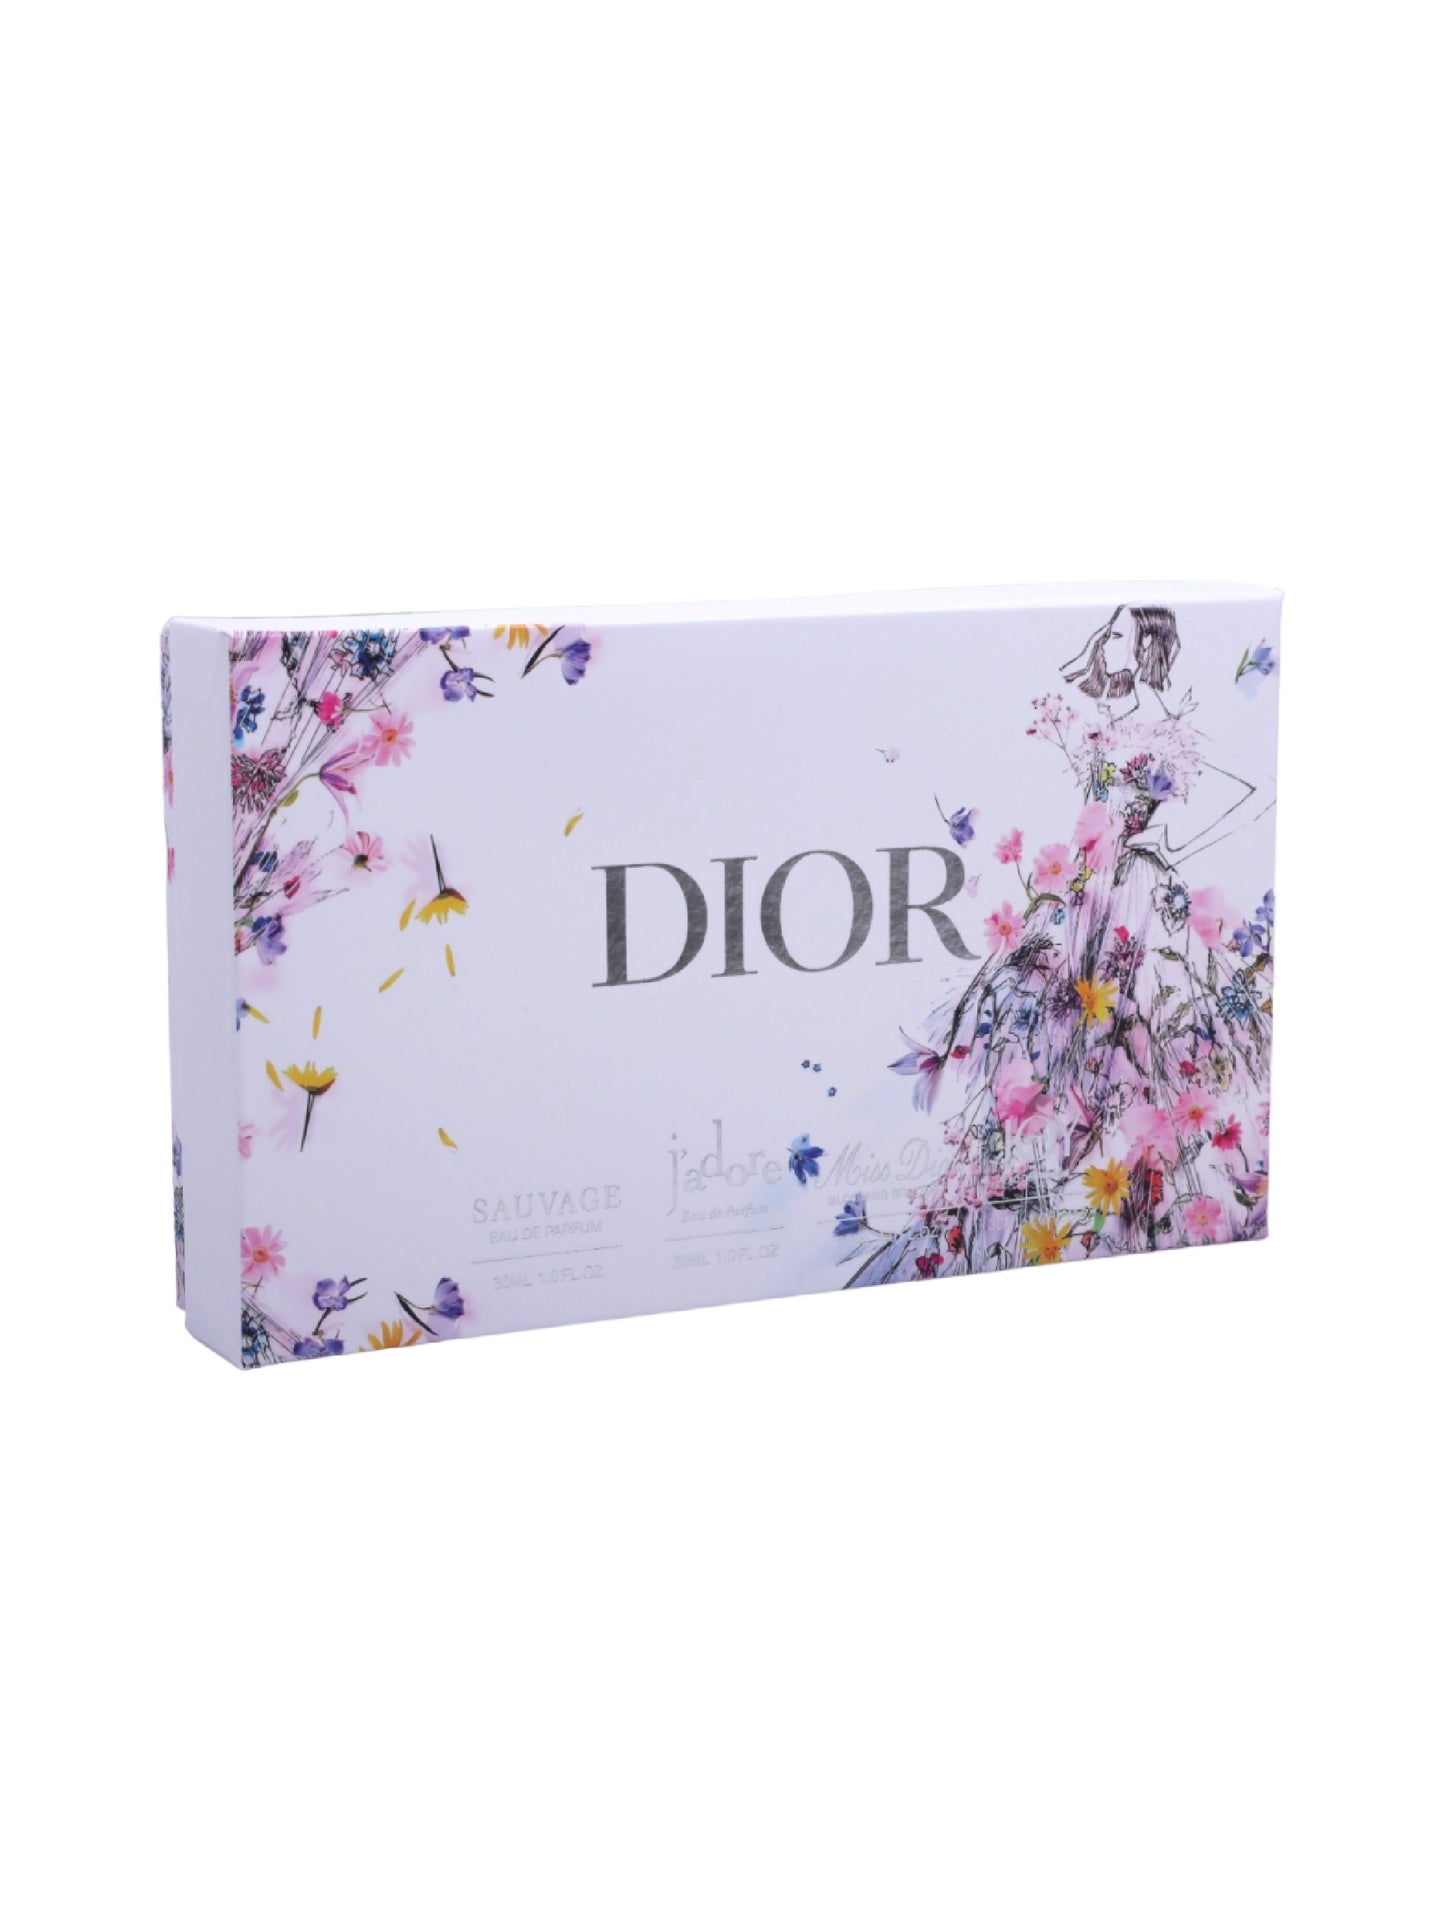 Dior Perfume Box Set of 4